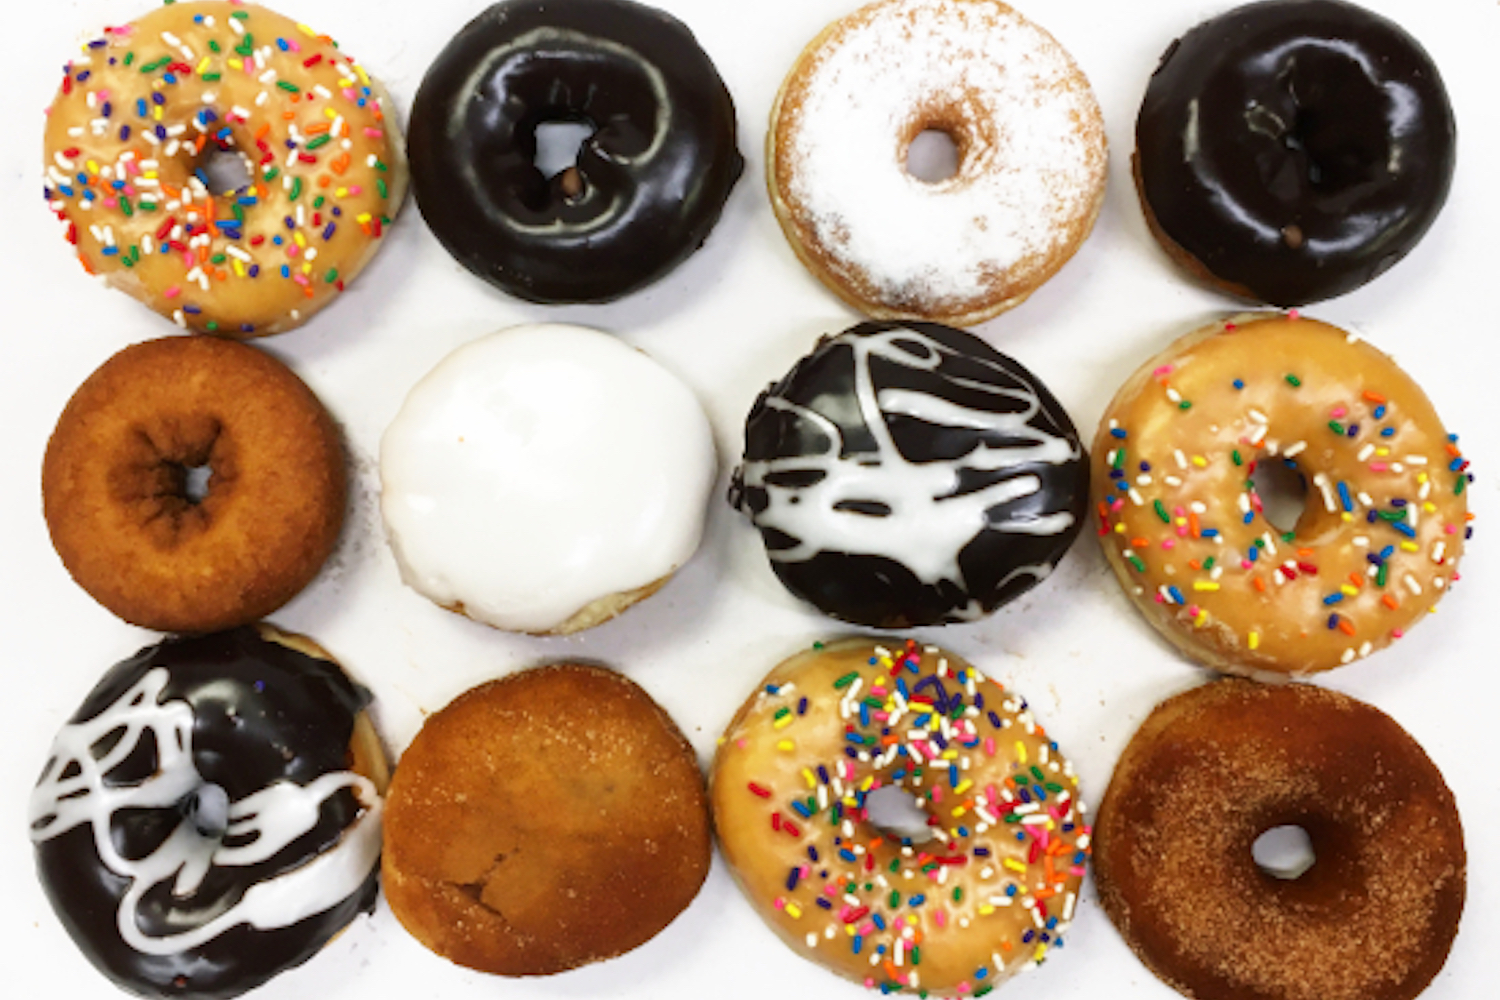 An dozen donut-assortment from Heidelberg's in Arlington